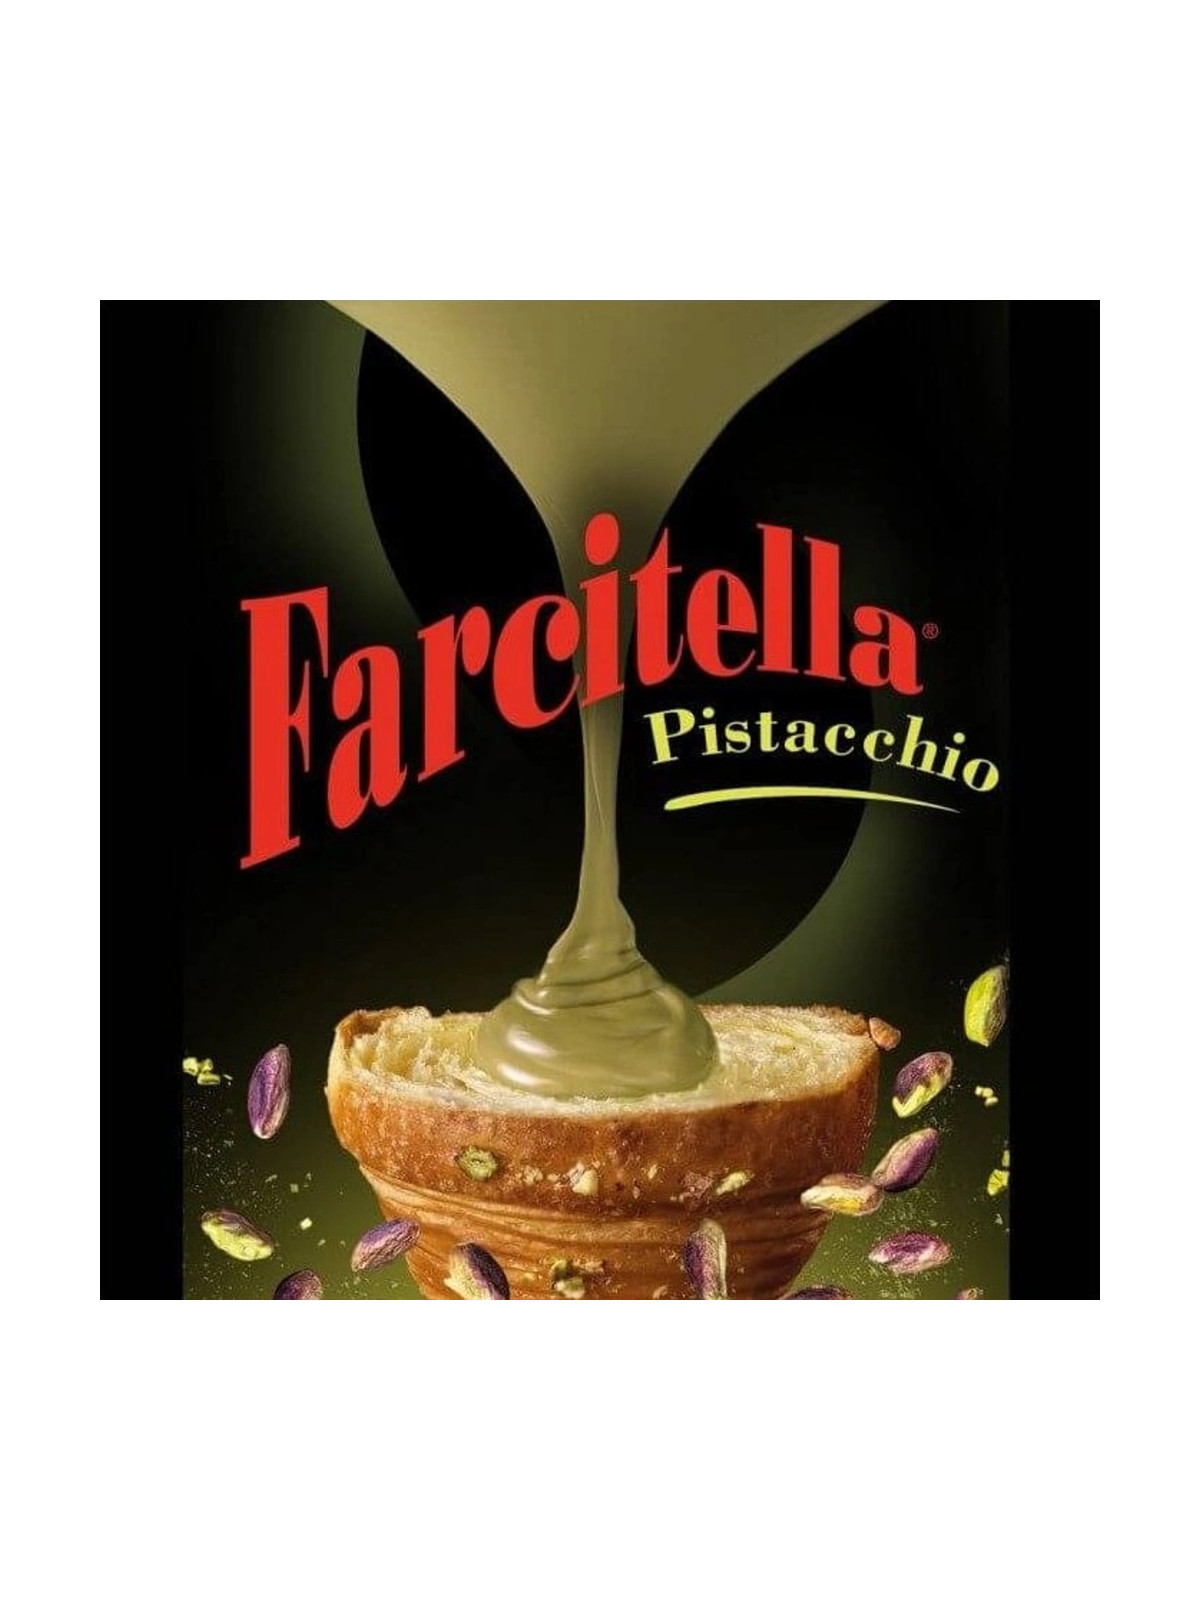 Farcitella Pistachio náplň - pistáciová - 200g